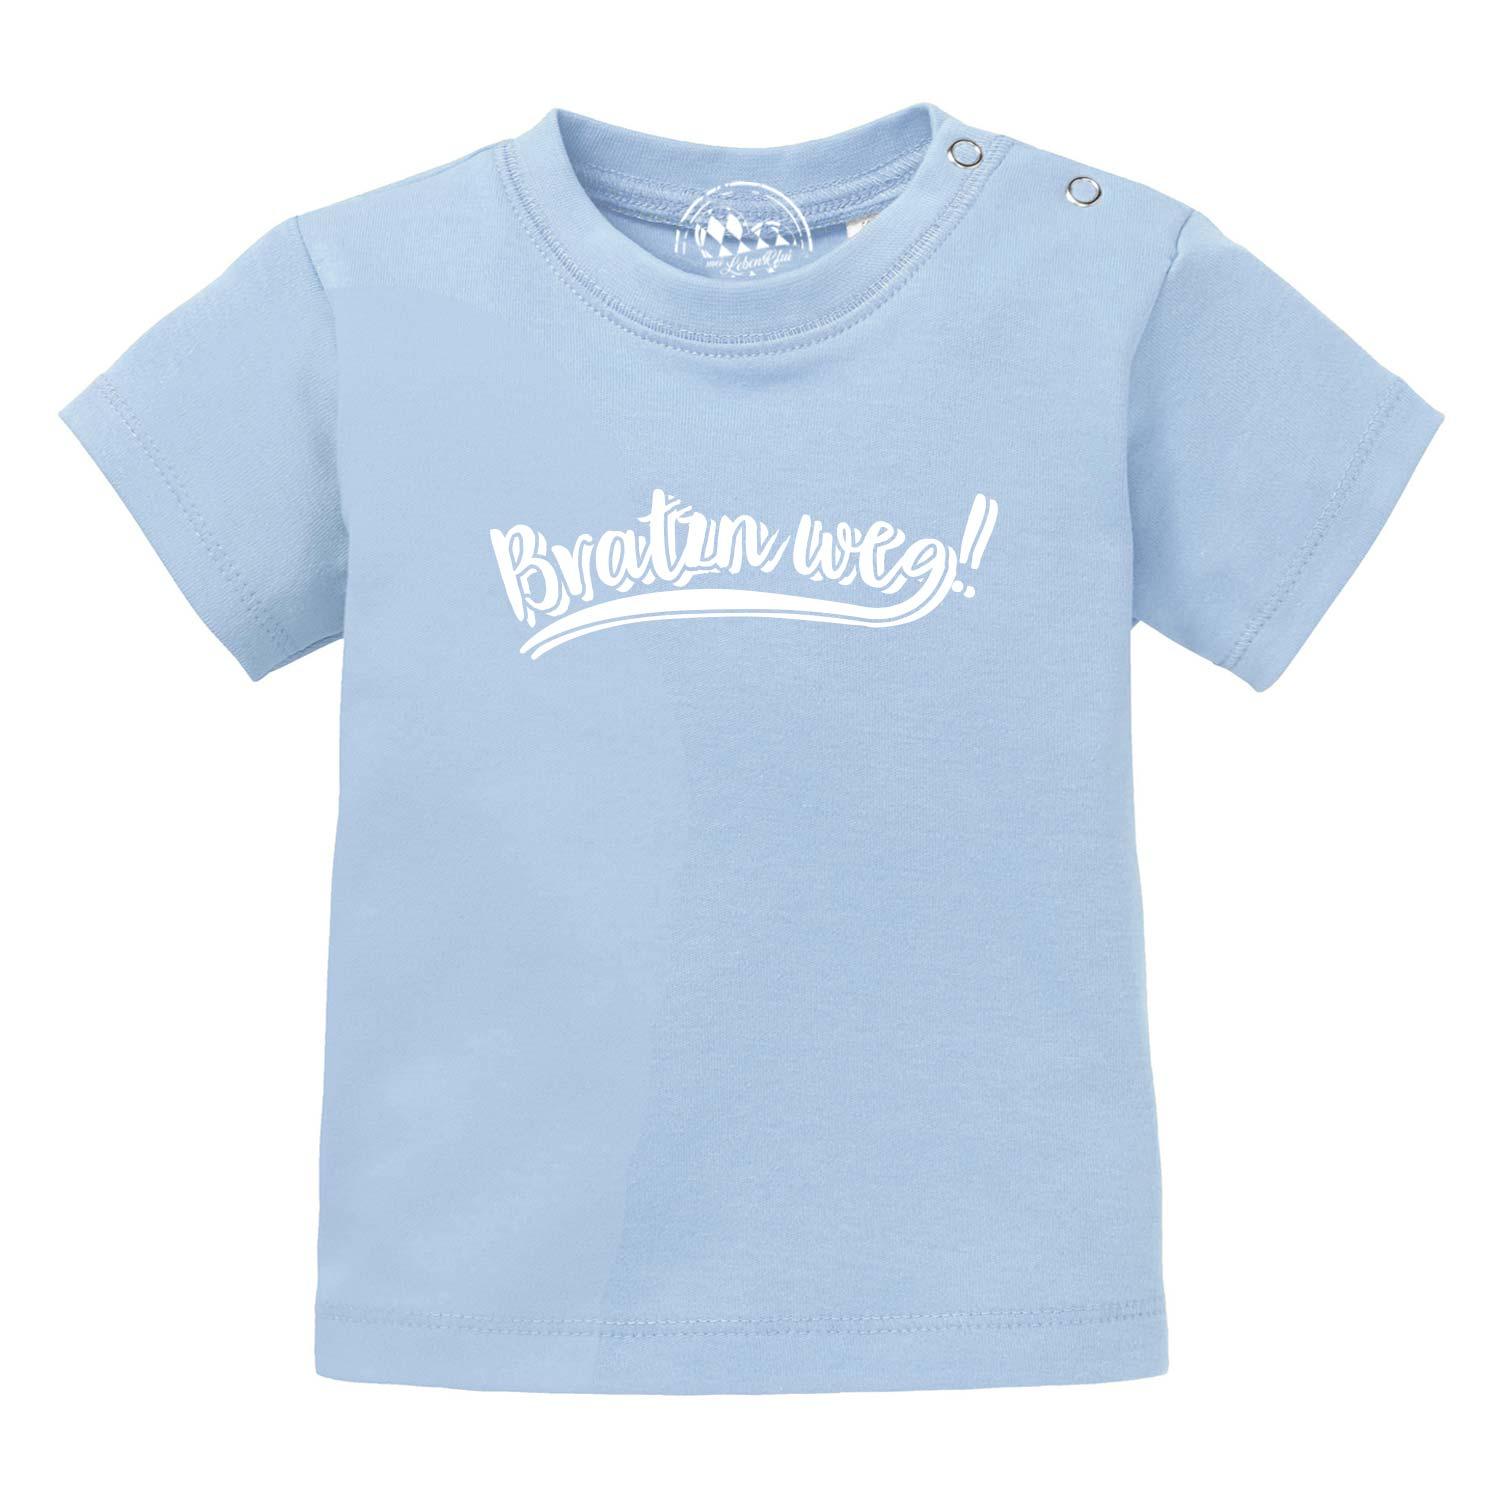 Baby T-Shirt "Bratzn weg" - bavariashop - mei LebensGfui